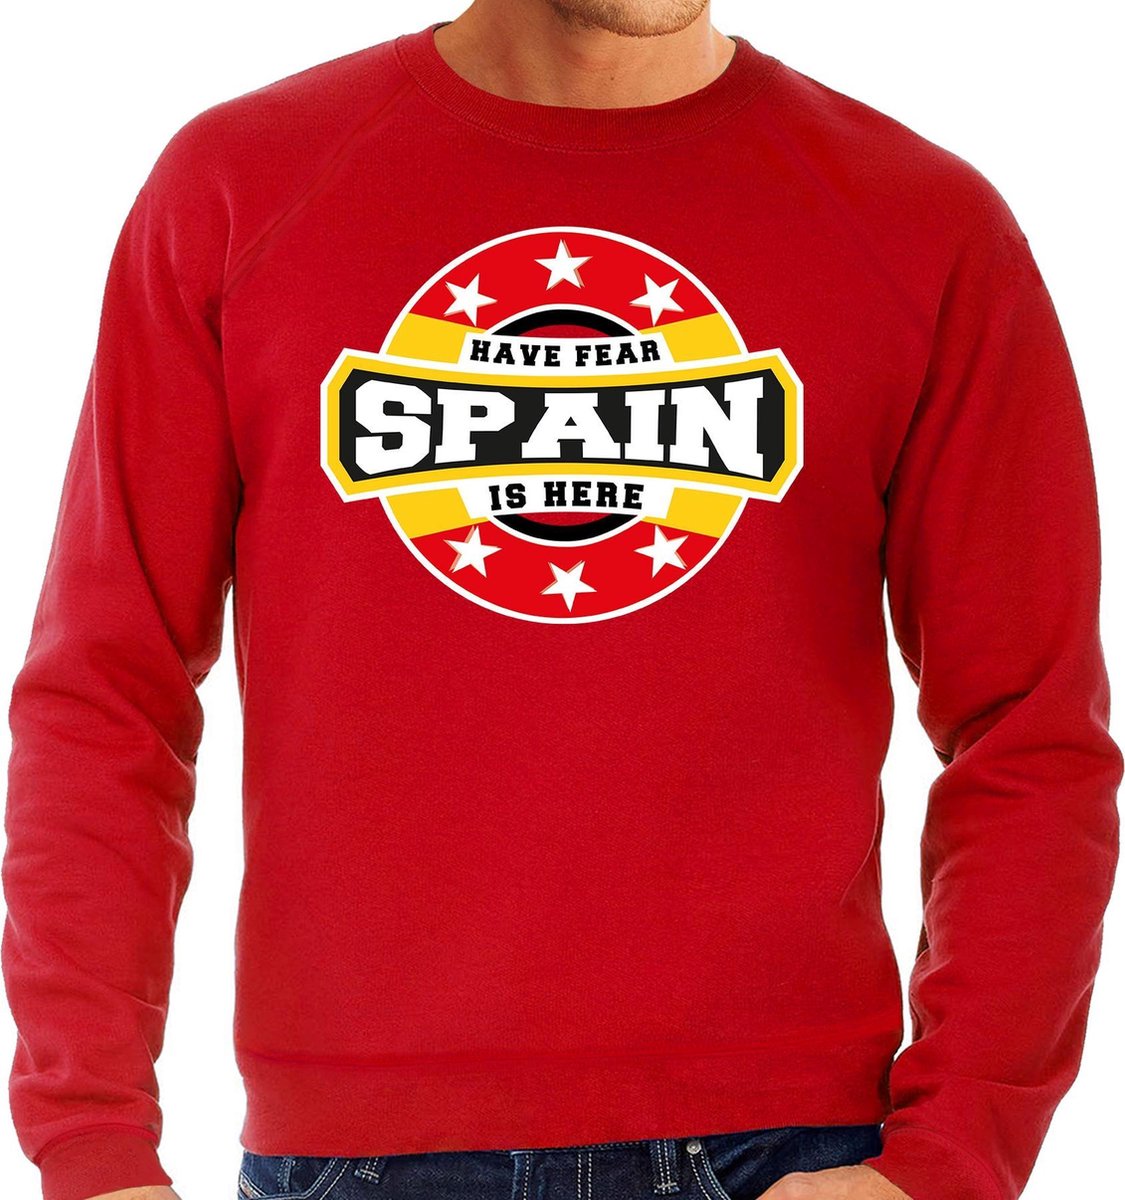 Have fear Spain is here sweater met sterren embleem in de kleuren van de Spaanse vlag - rood - heren - Spanje supporter / Spaans elftal fan trui / EK / WK / kleding M